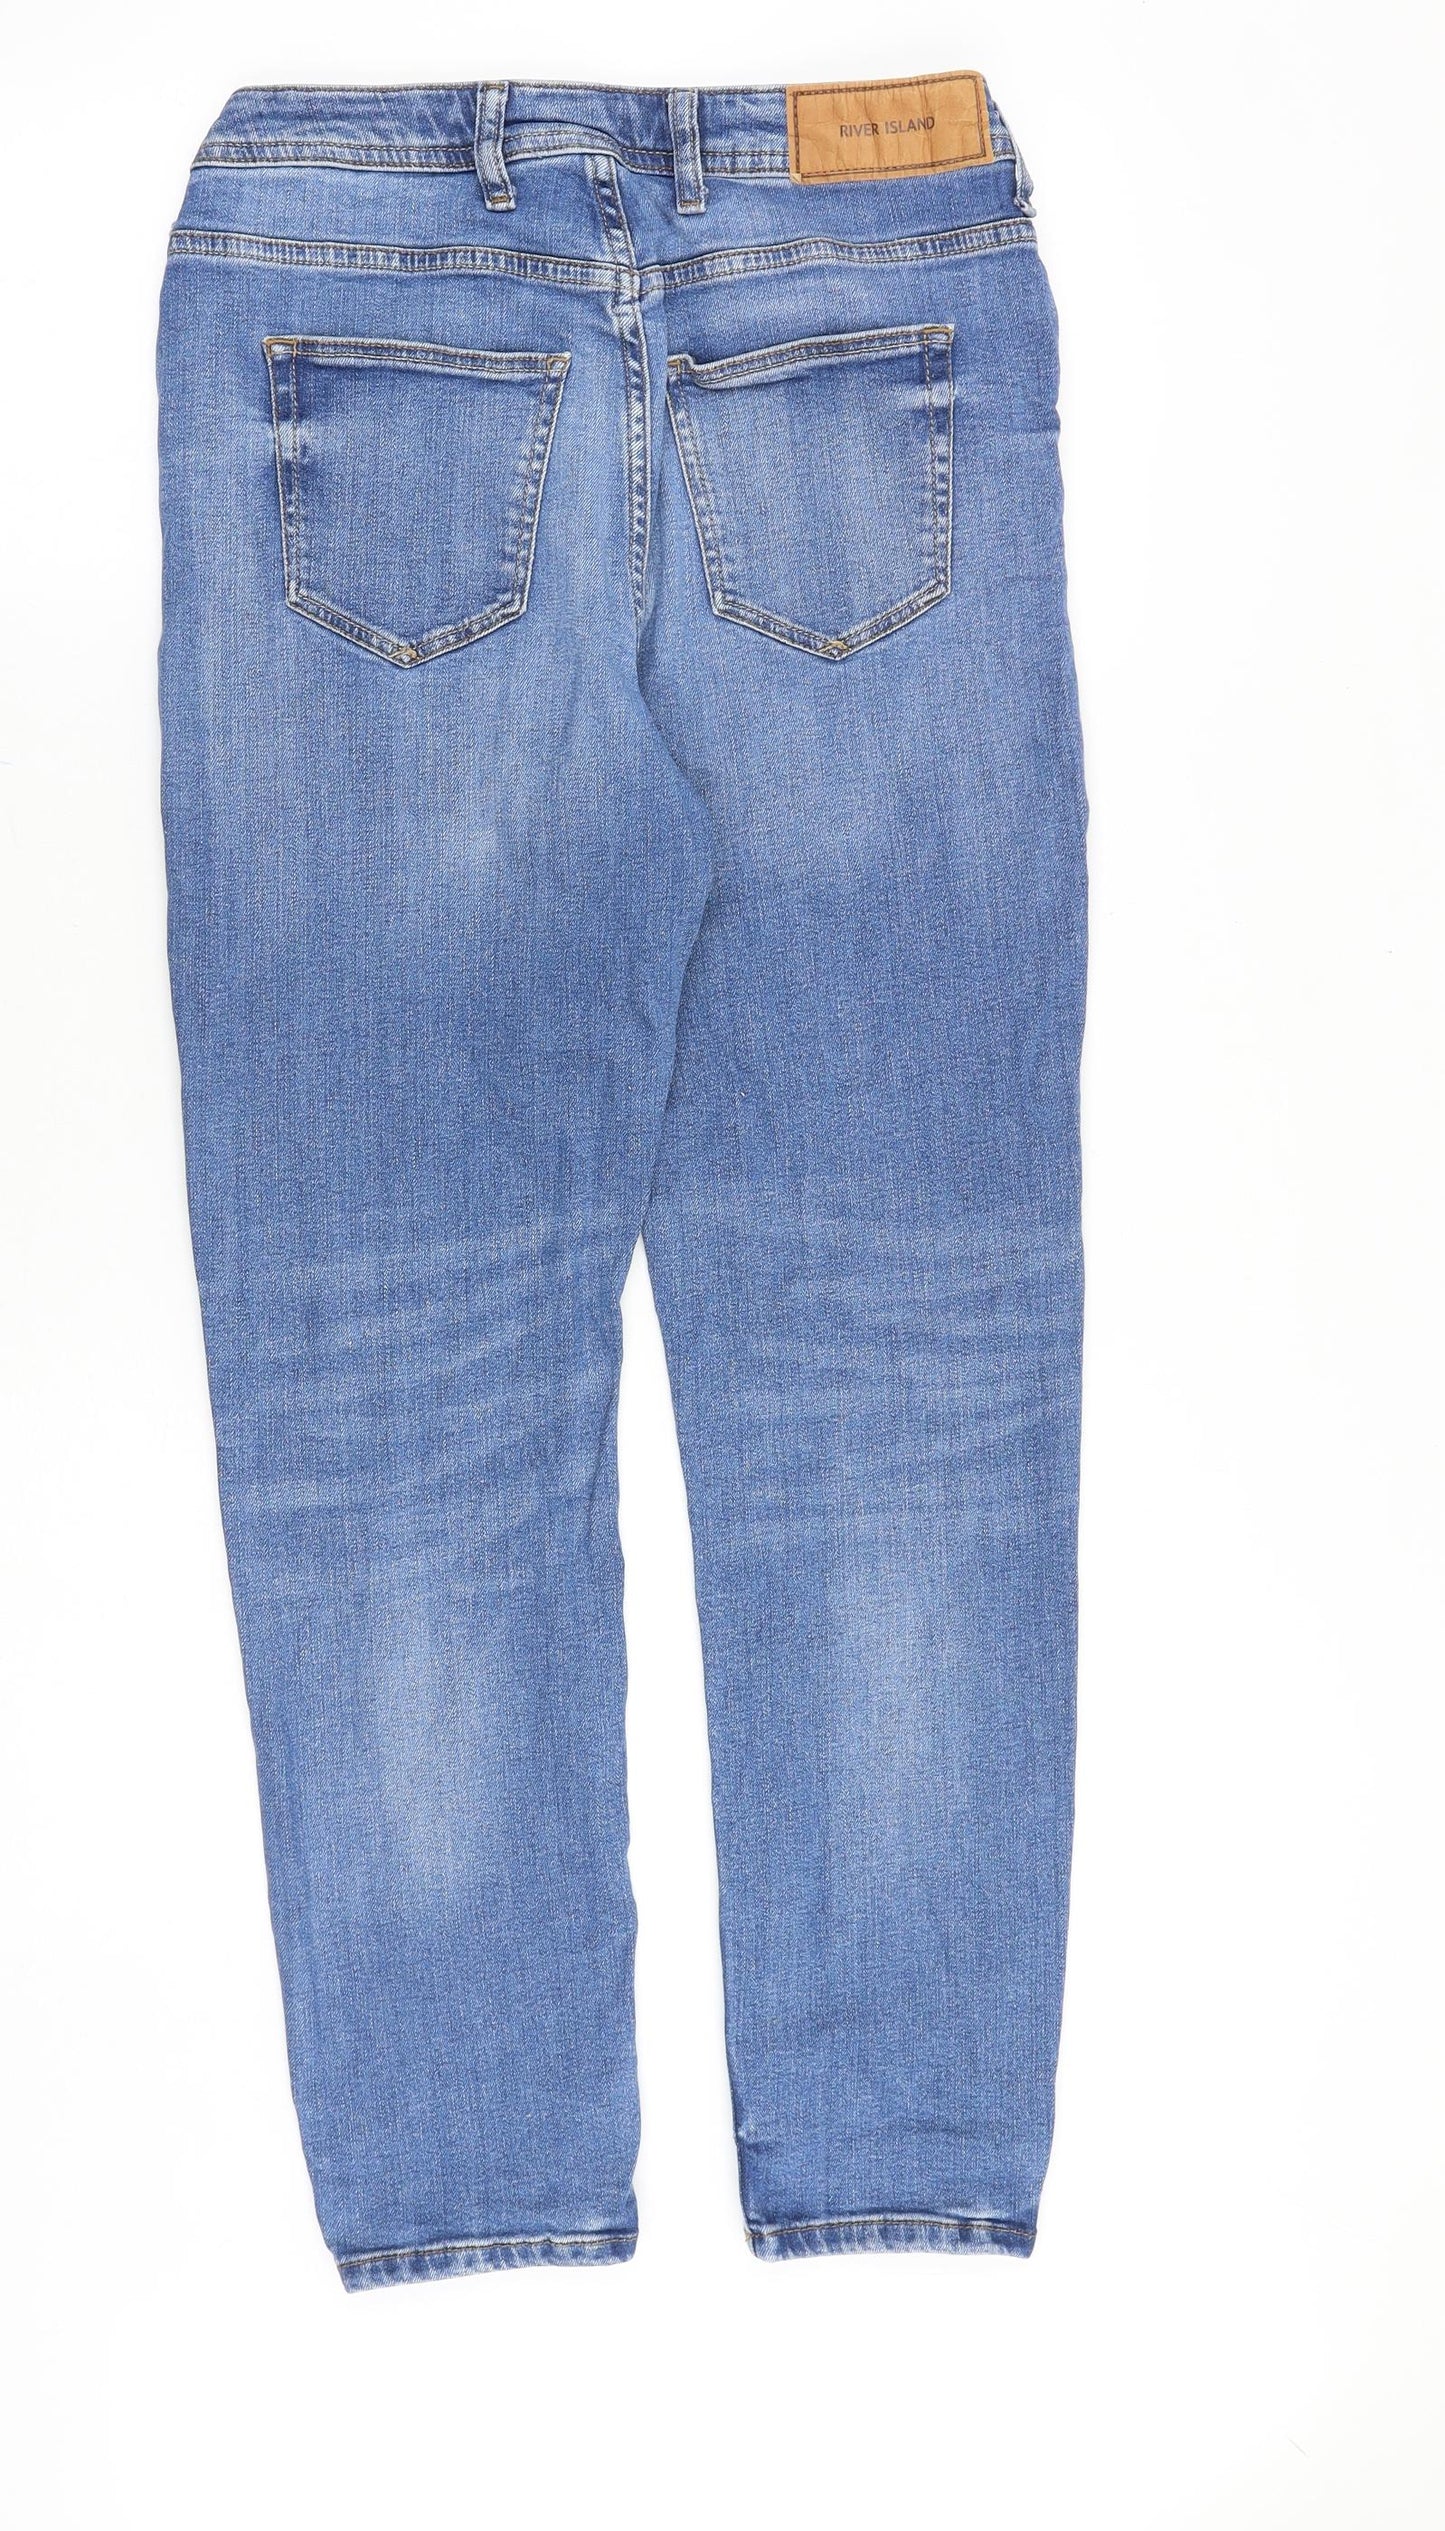 River Island Mens Blue Cotton Skinny Jeans Size 28 in Regular Zip